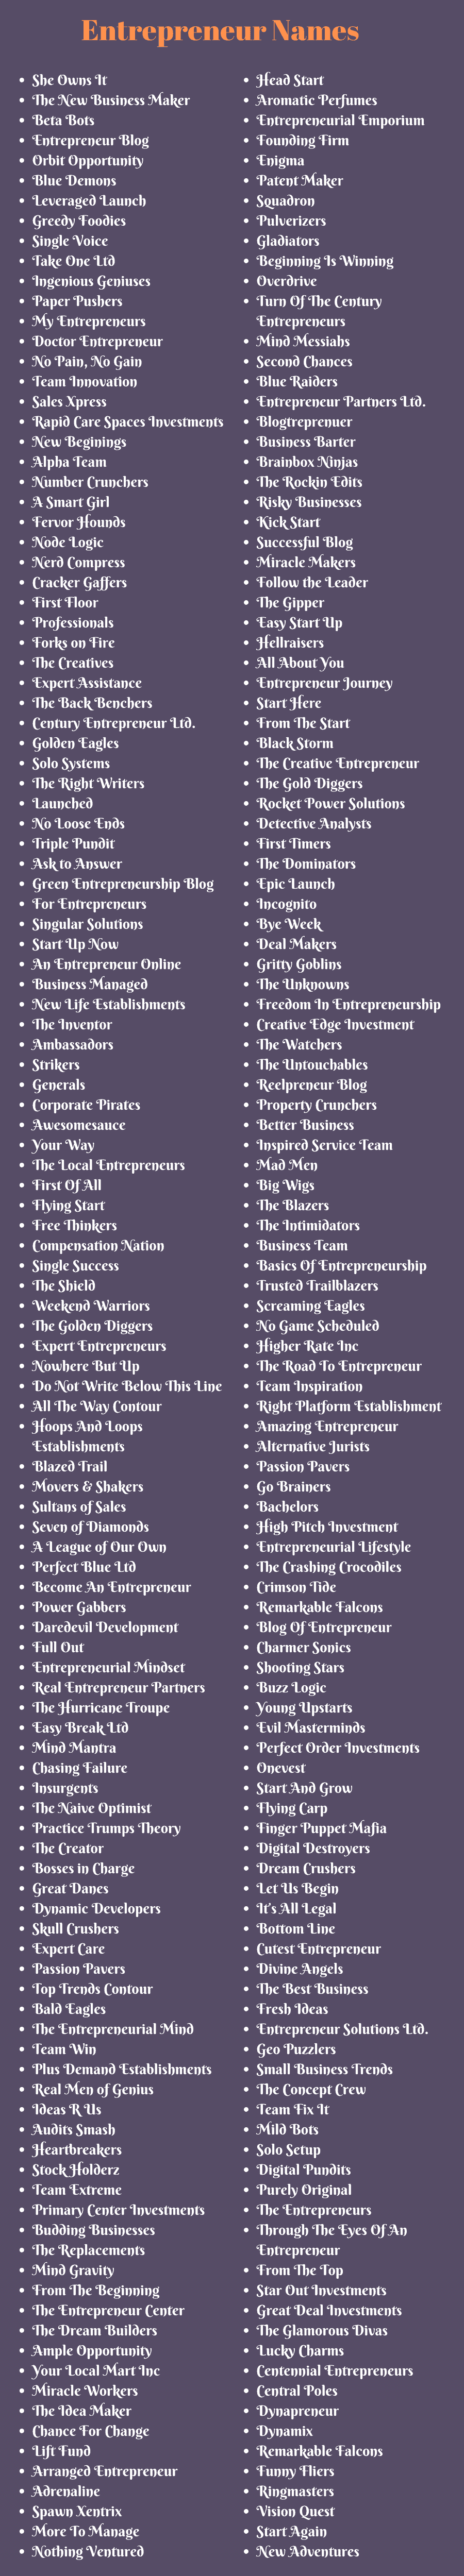 Entrepreneur Names